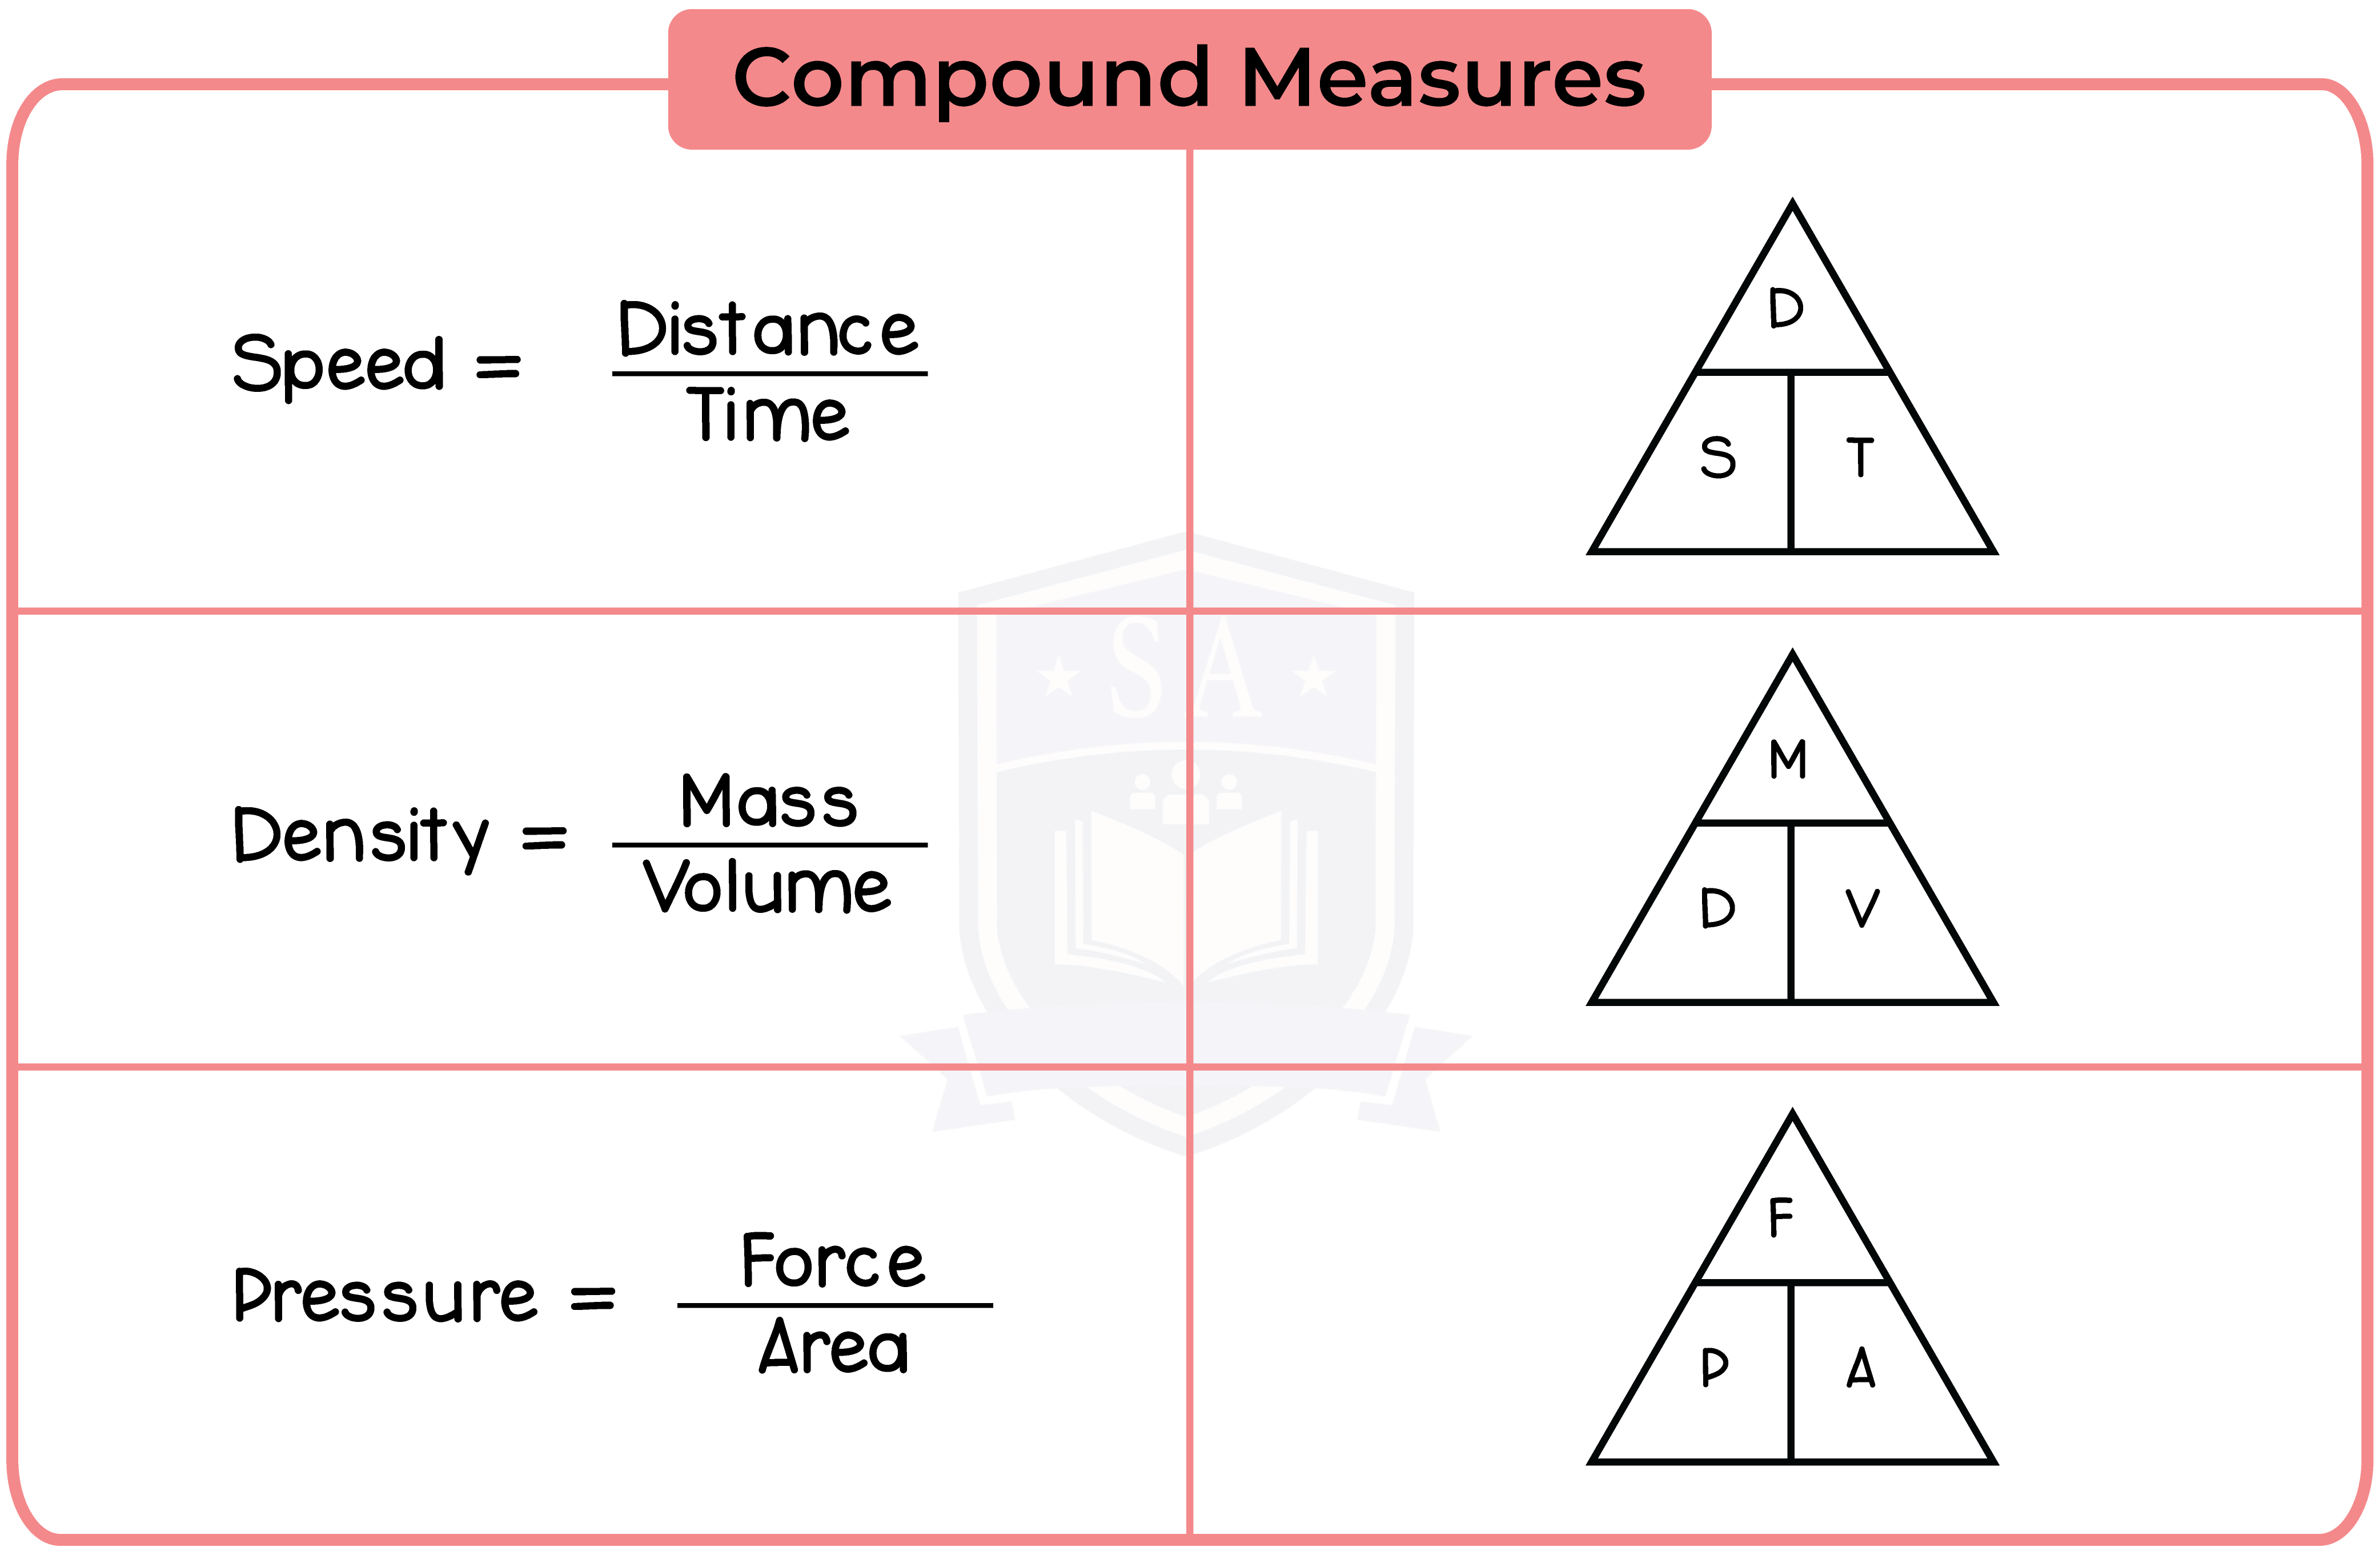 edexcel_igcse_mathematics a_topic 28_measures_002_Compound Measures